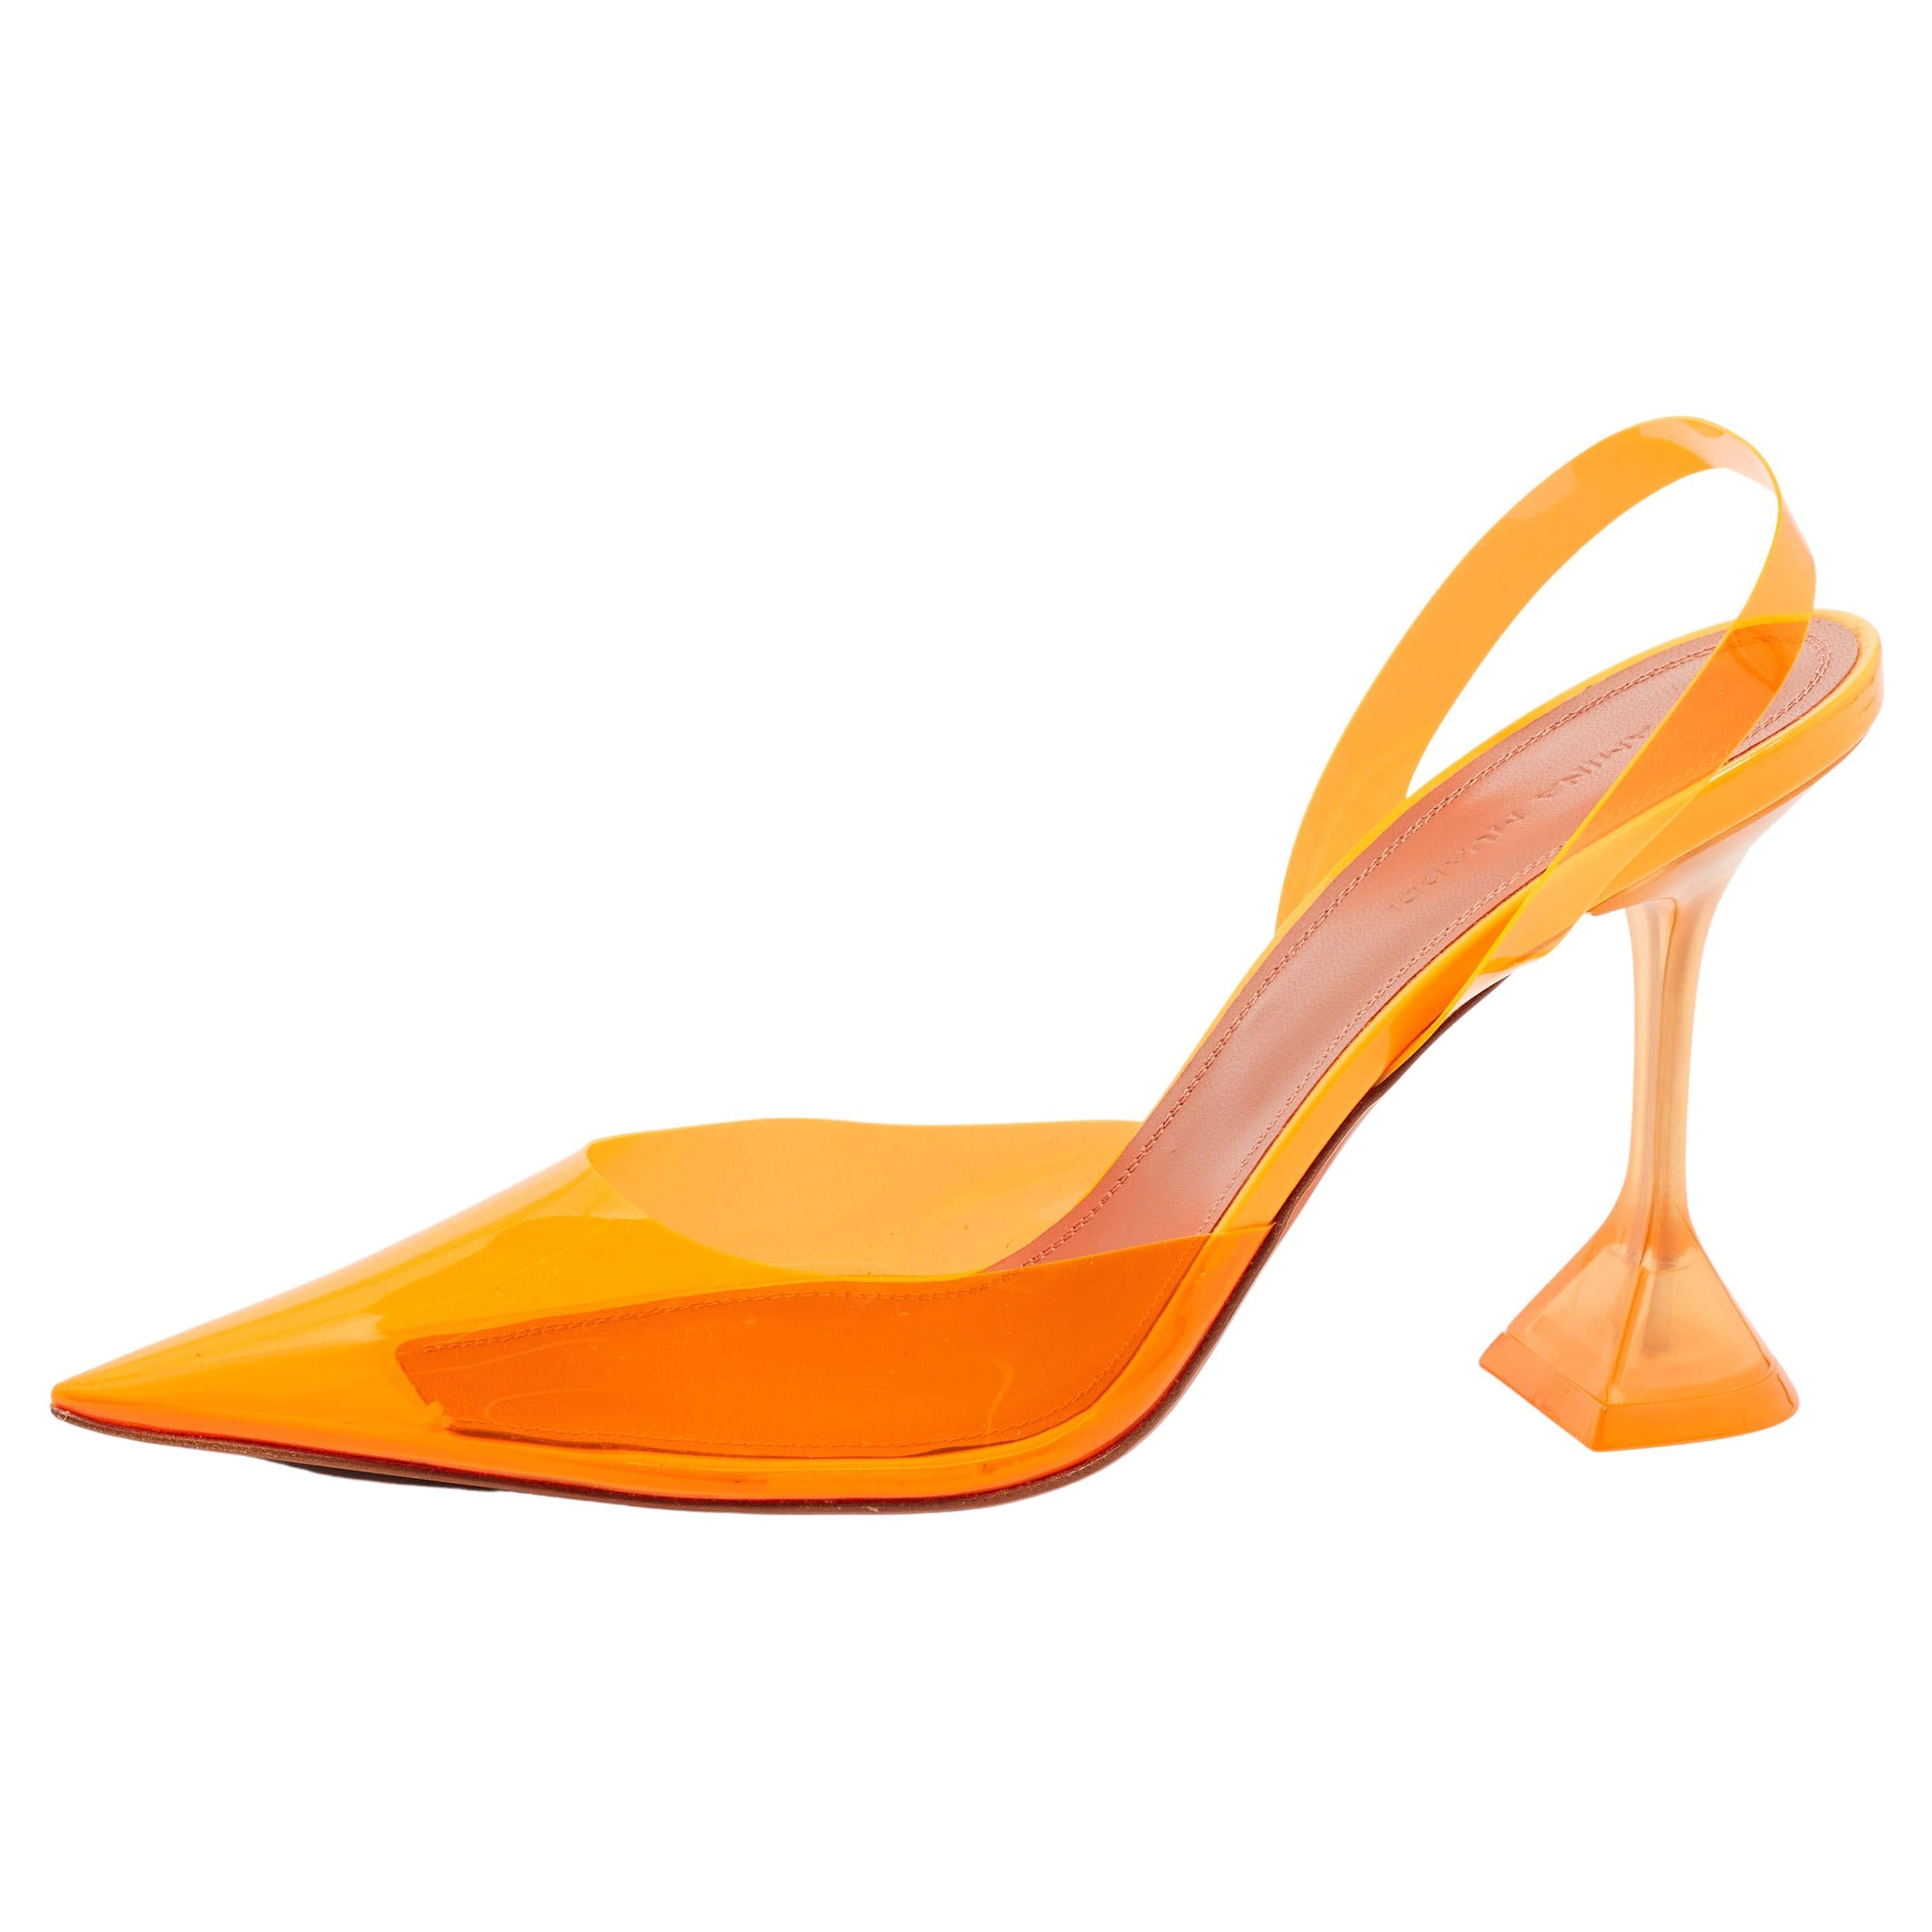 Amina Muaddi escarpins Holli en verre orange avec bride arrière en PVC, taille 40,5 en vente